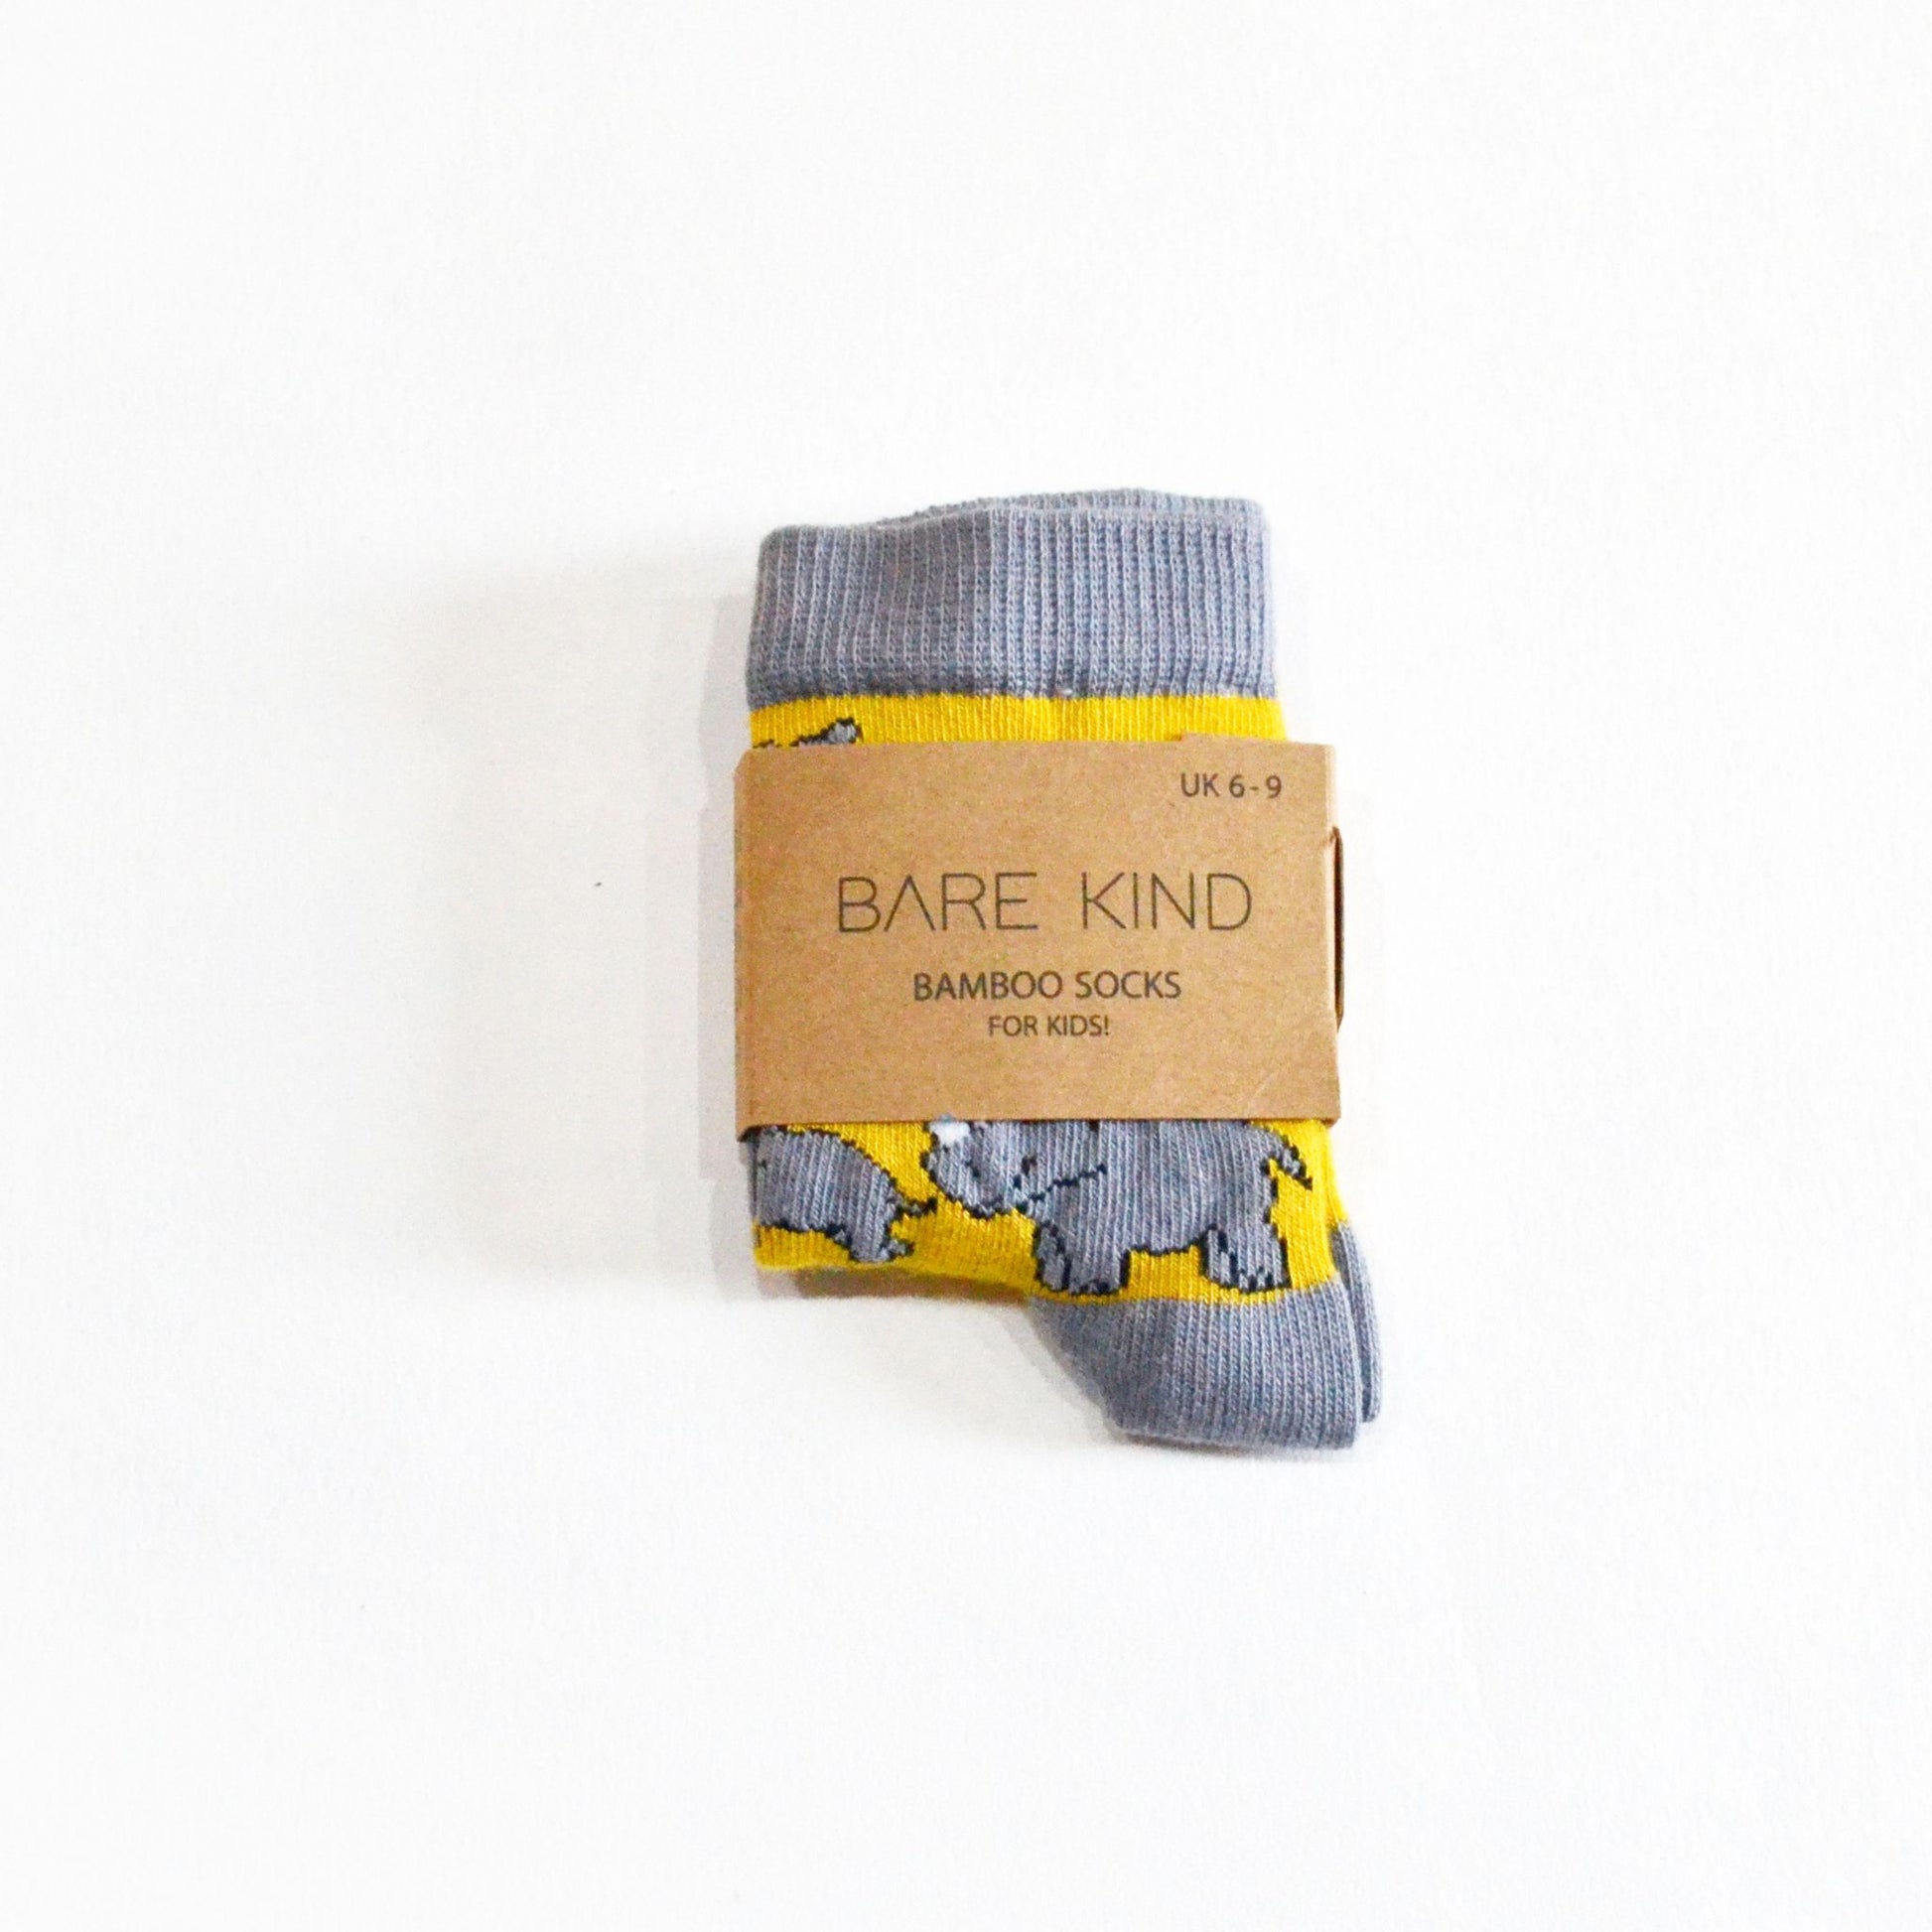 Rhino socks - Bamboo Socks in 3 Kids' Sizes